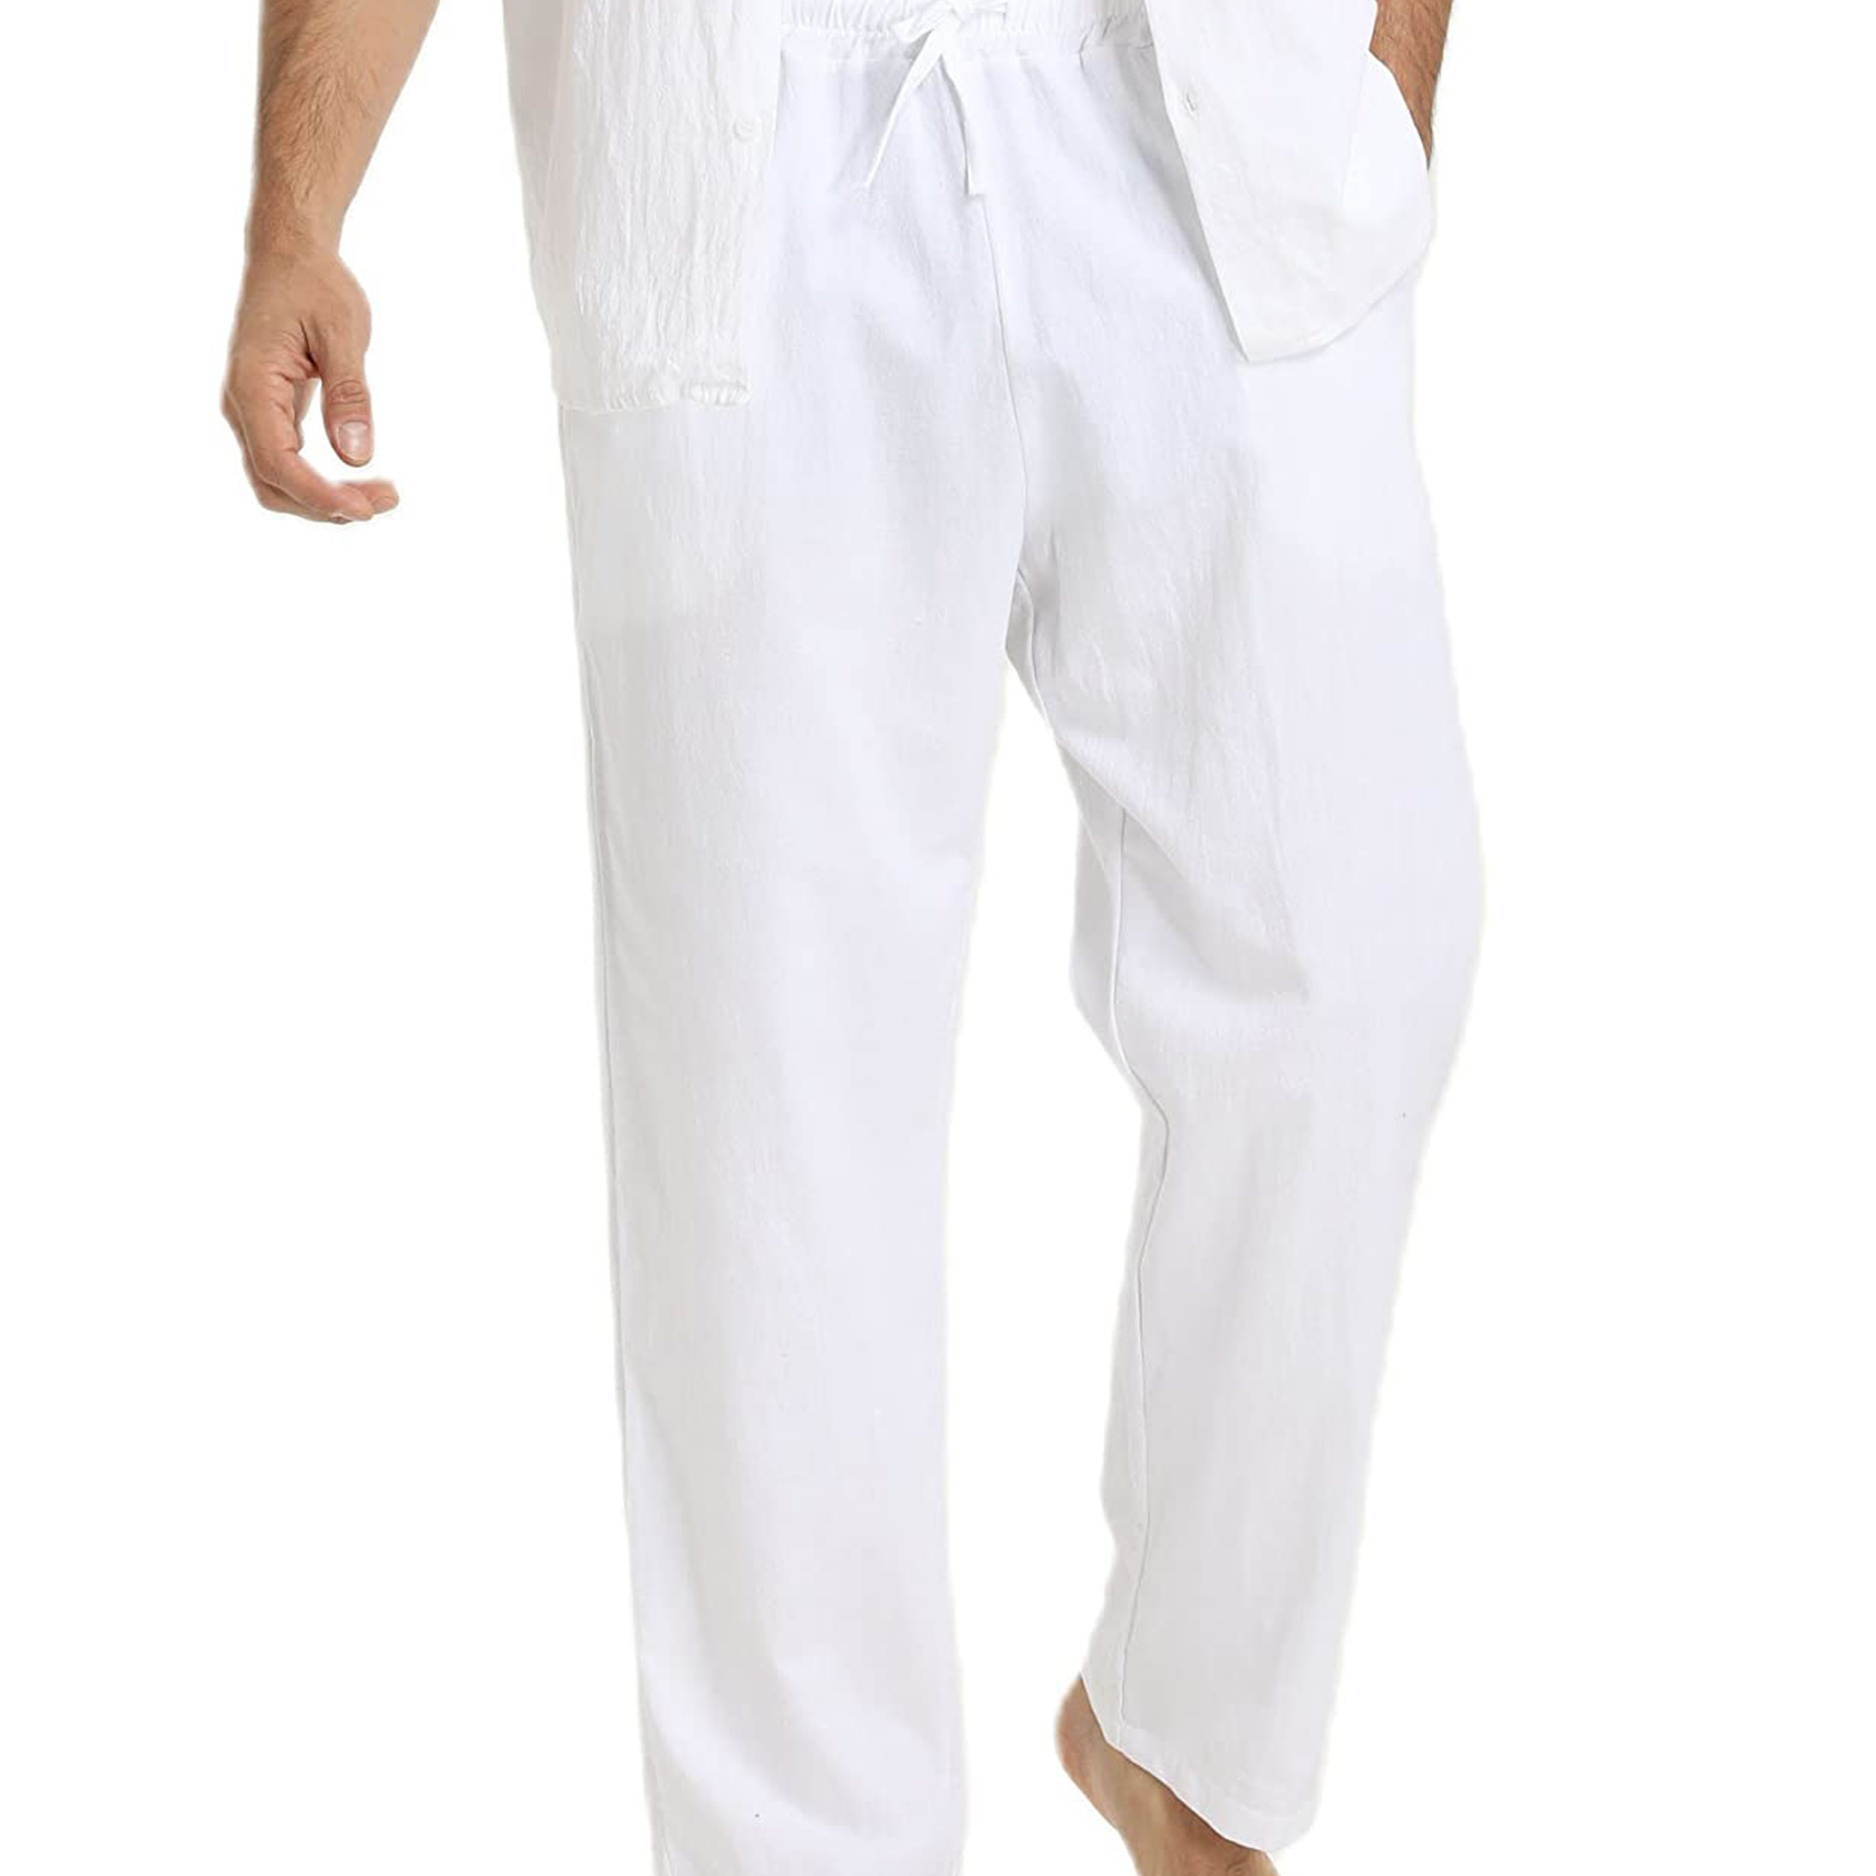 

Mens Casual Cotton Linen Pants Loose Fit Straight-legs Elastic Drawstring Waist Casual Jogger Yoga Long Pants